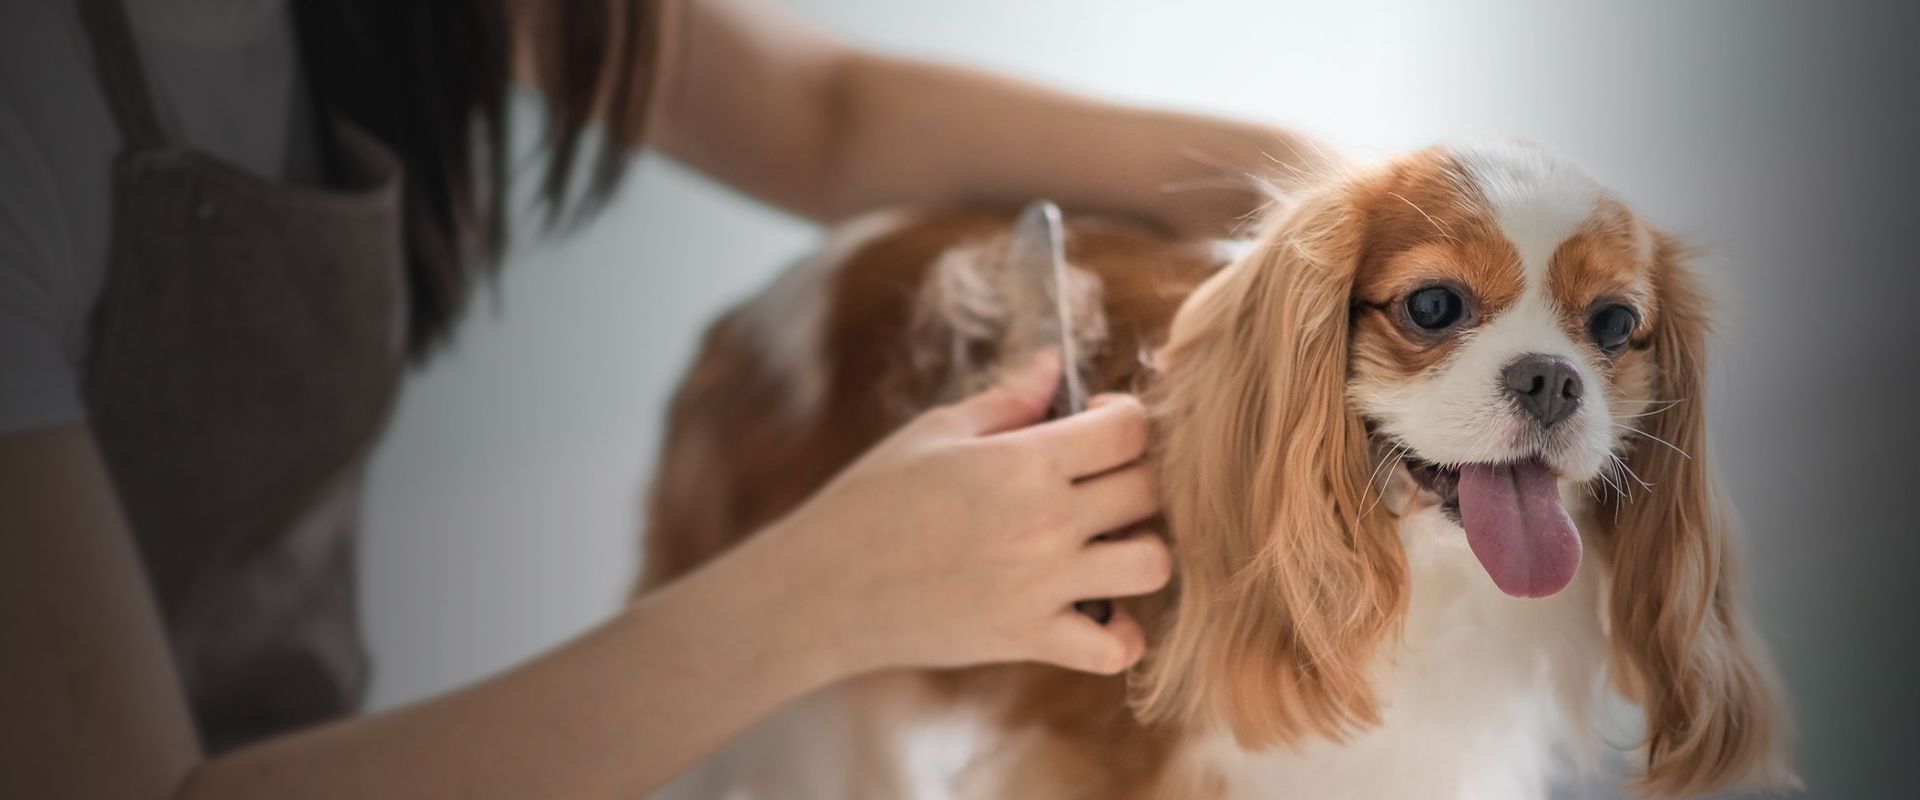 pet groomer brushing dog